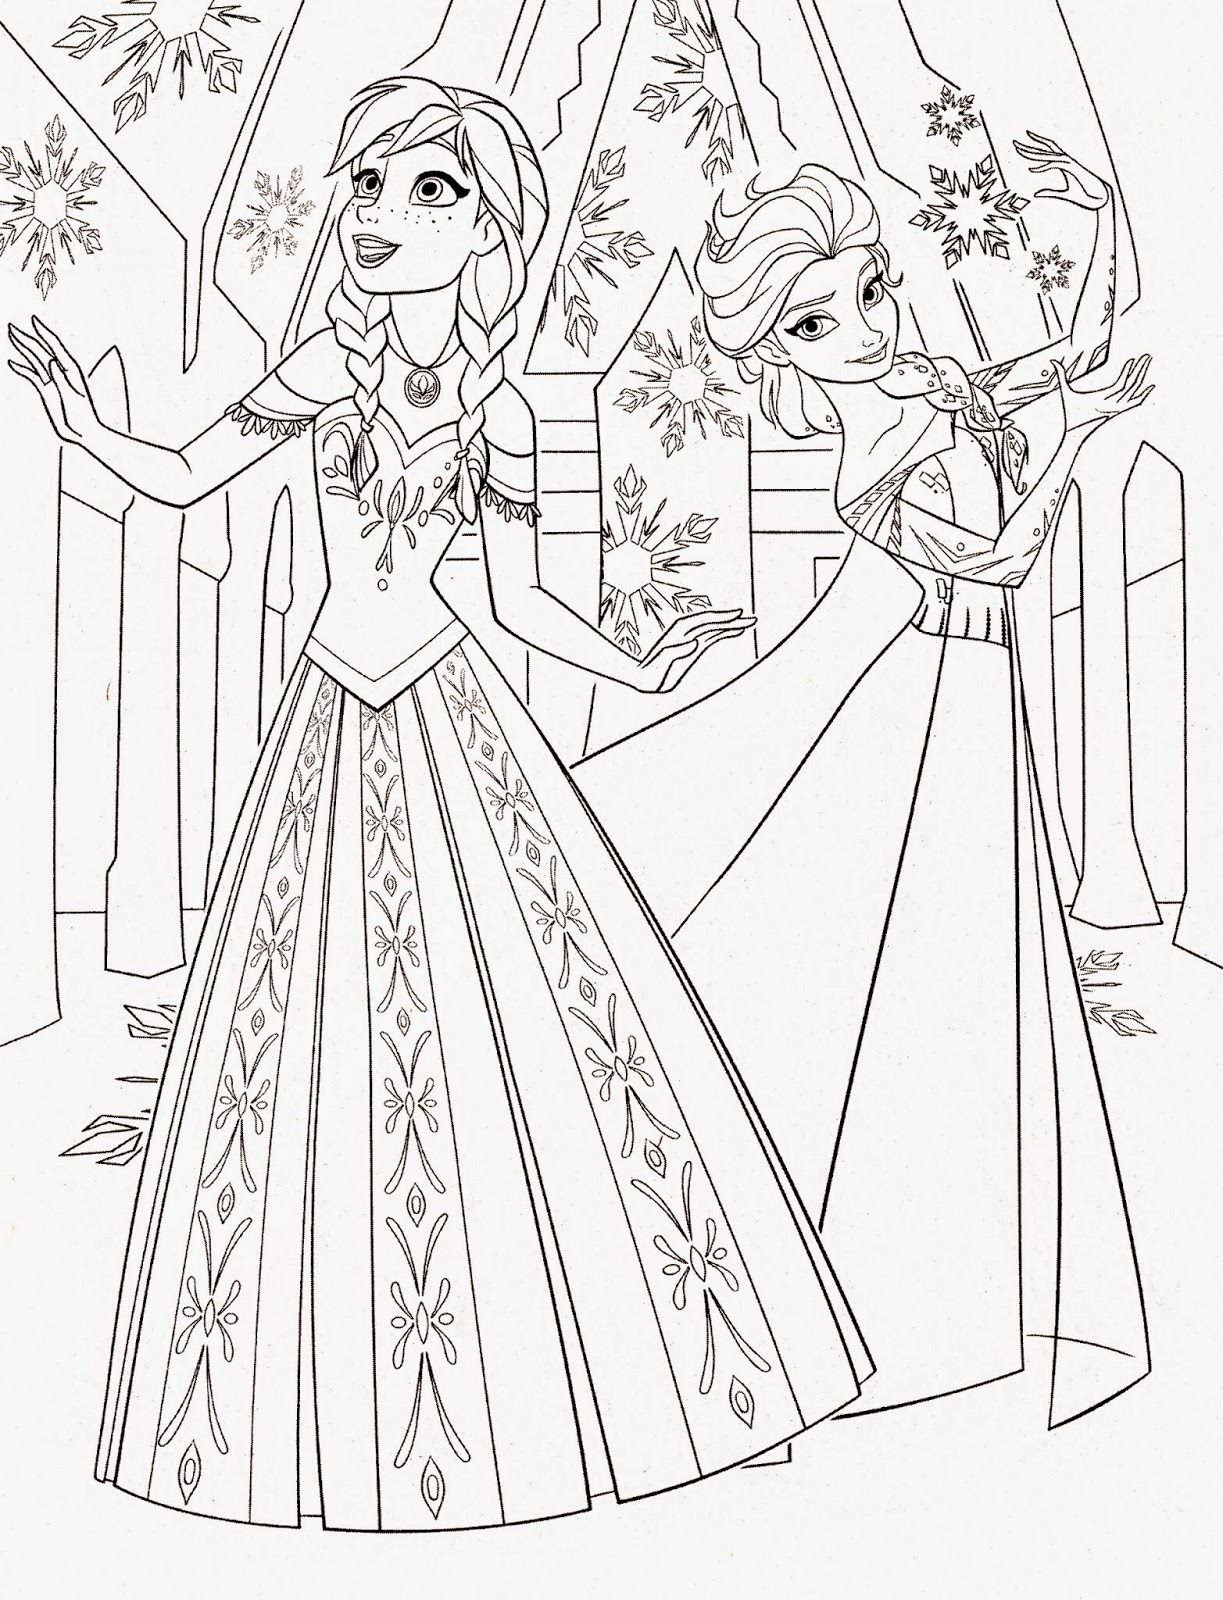 Disney Princess Frozen Elsa and Anna Coloring Pages